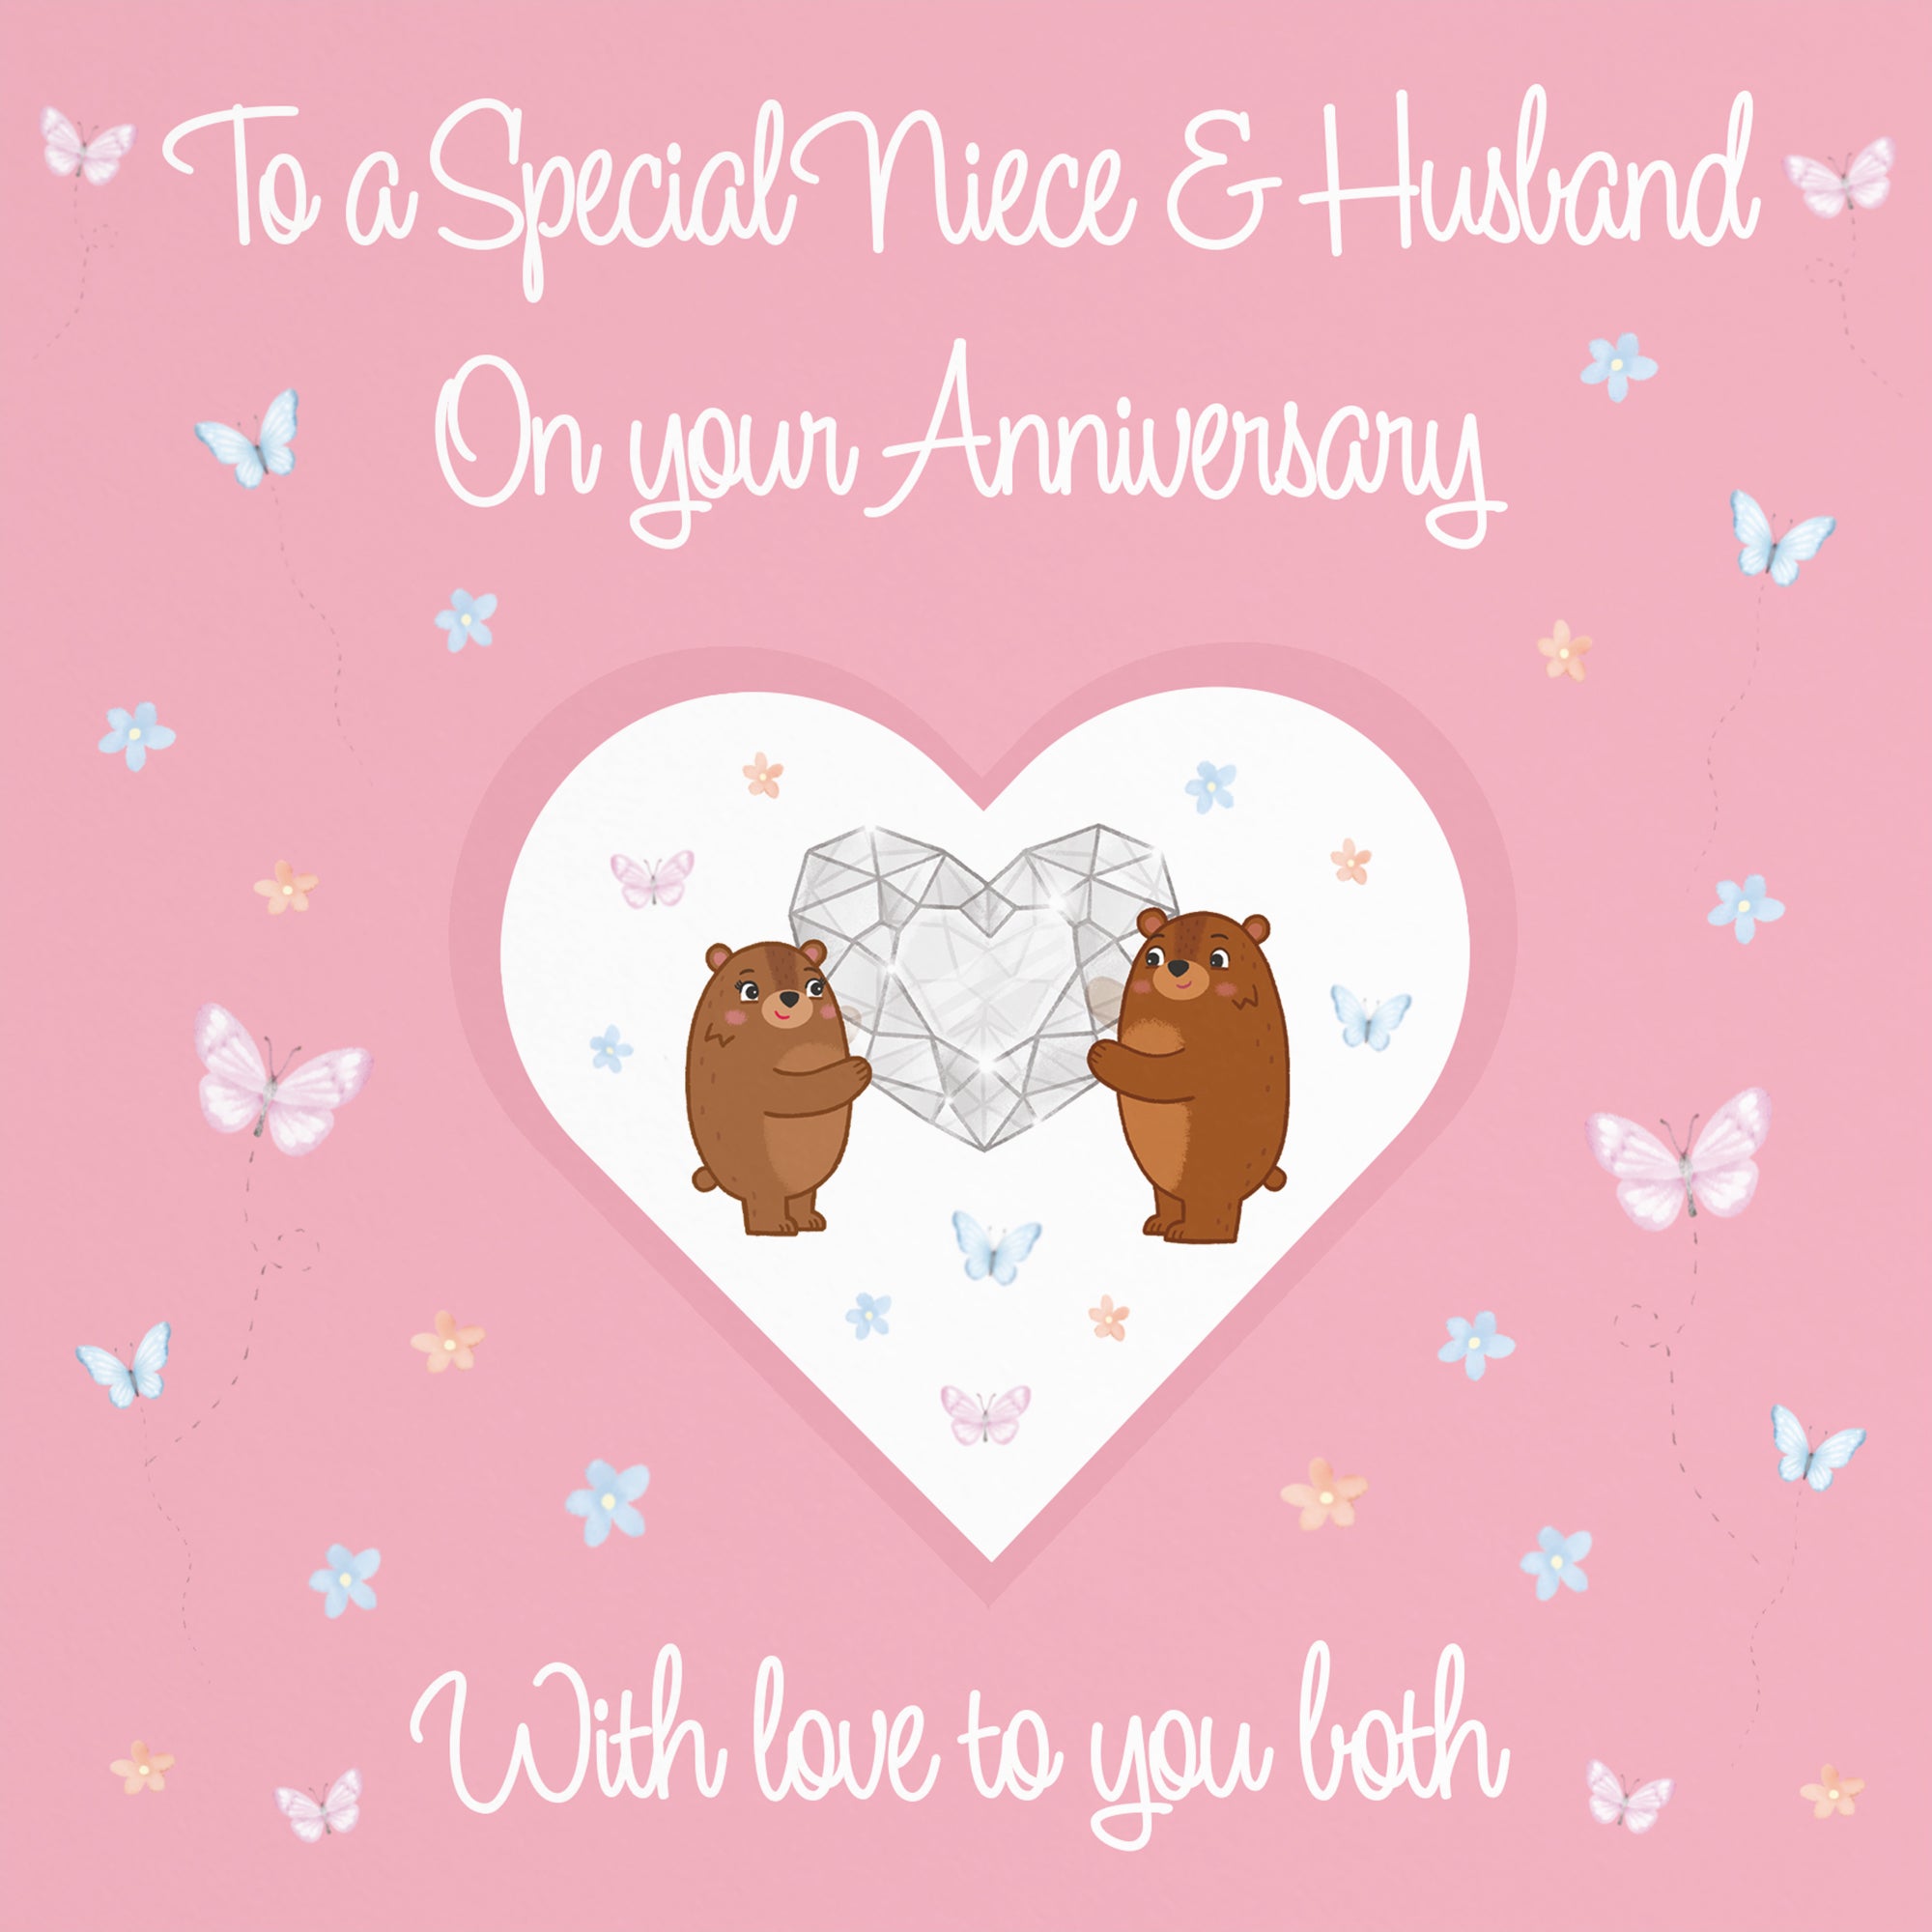 Niece And Husband Anniversary Card Romantic Meadows